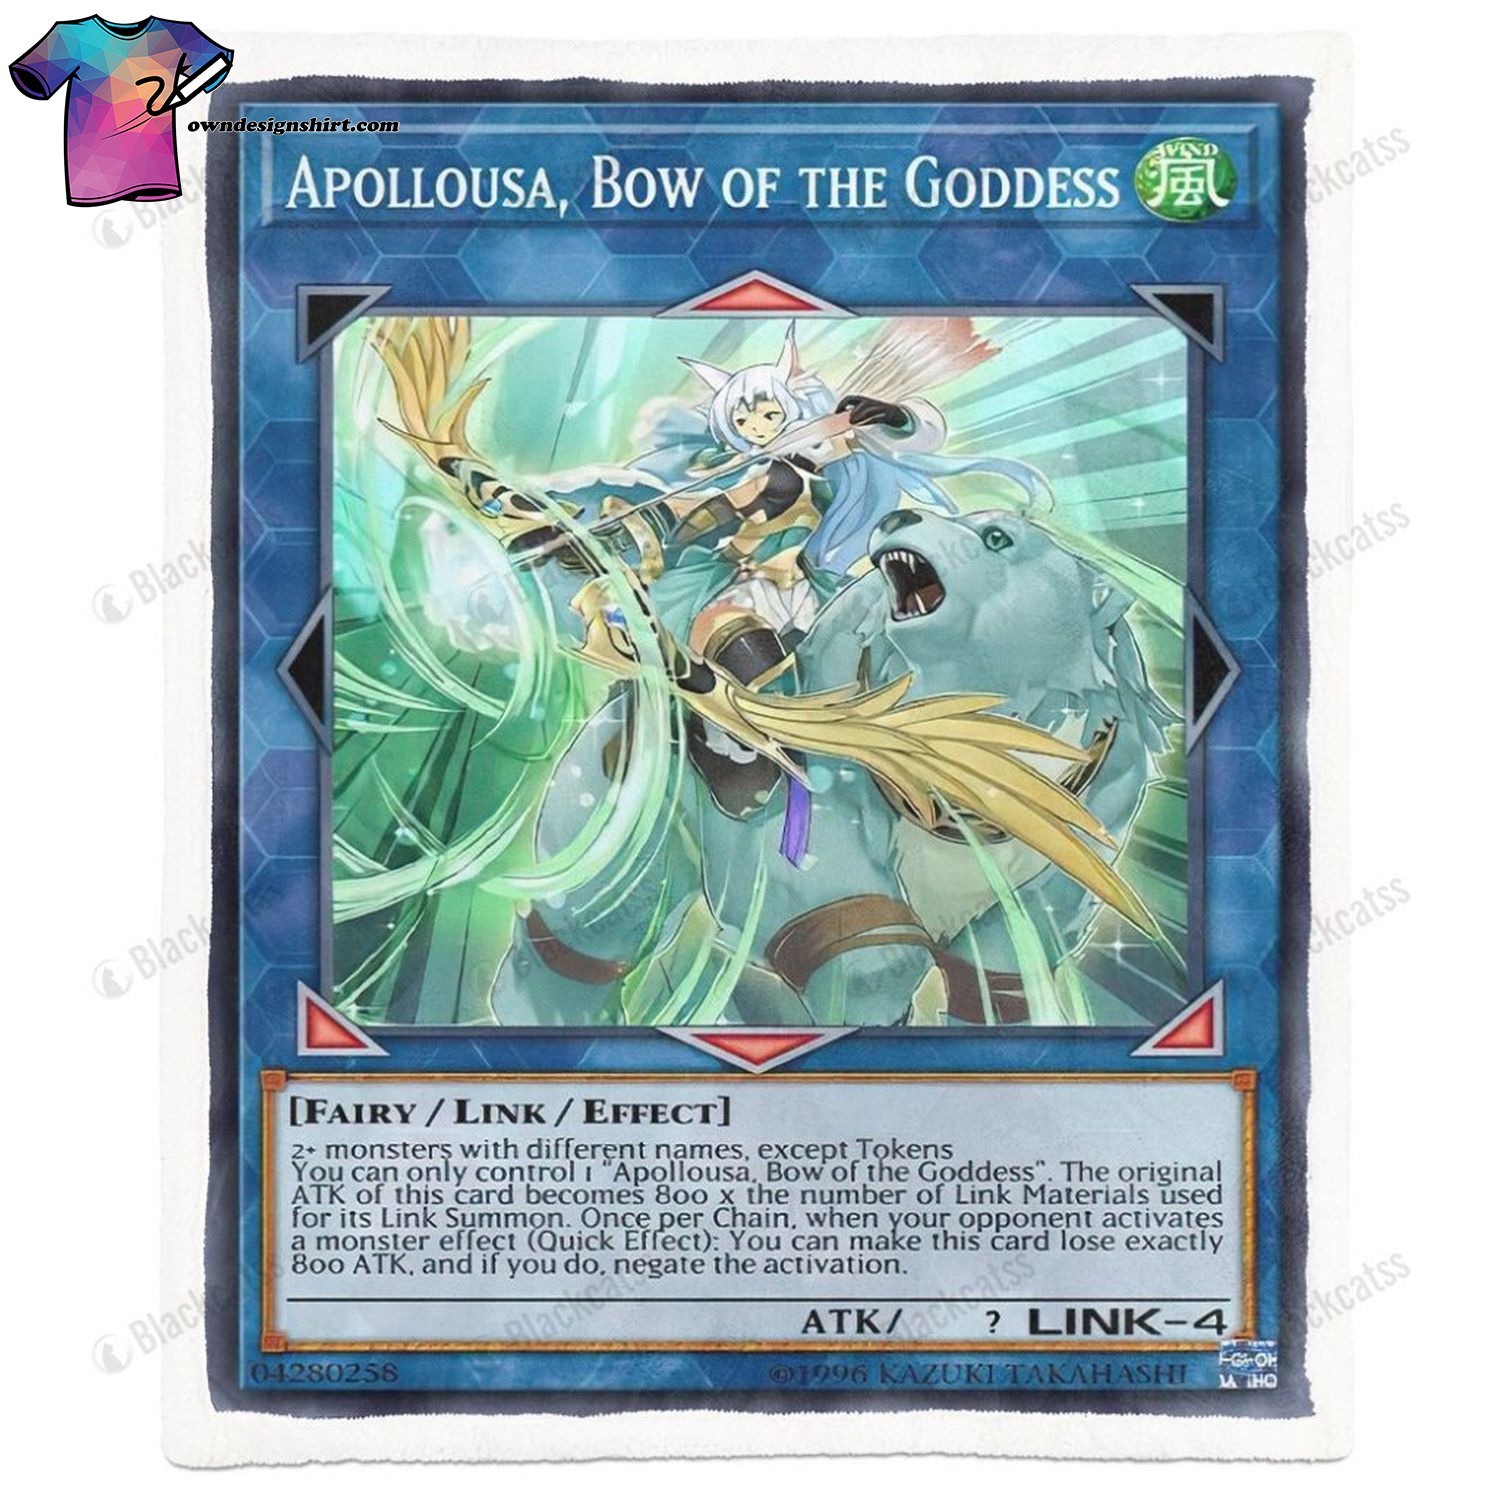 Game Yu-gi-oh Apollousa Bow Of The Goddess Full Print Soft Blanket